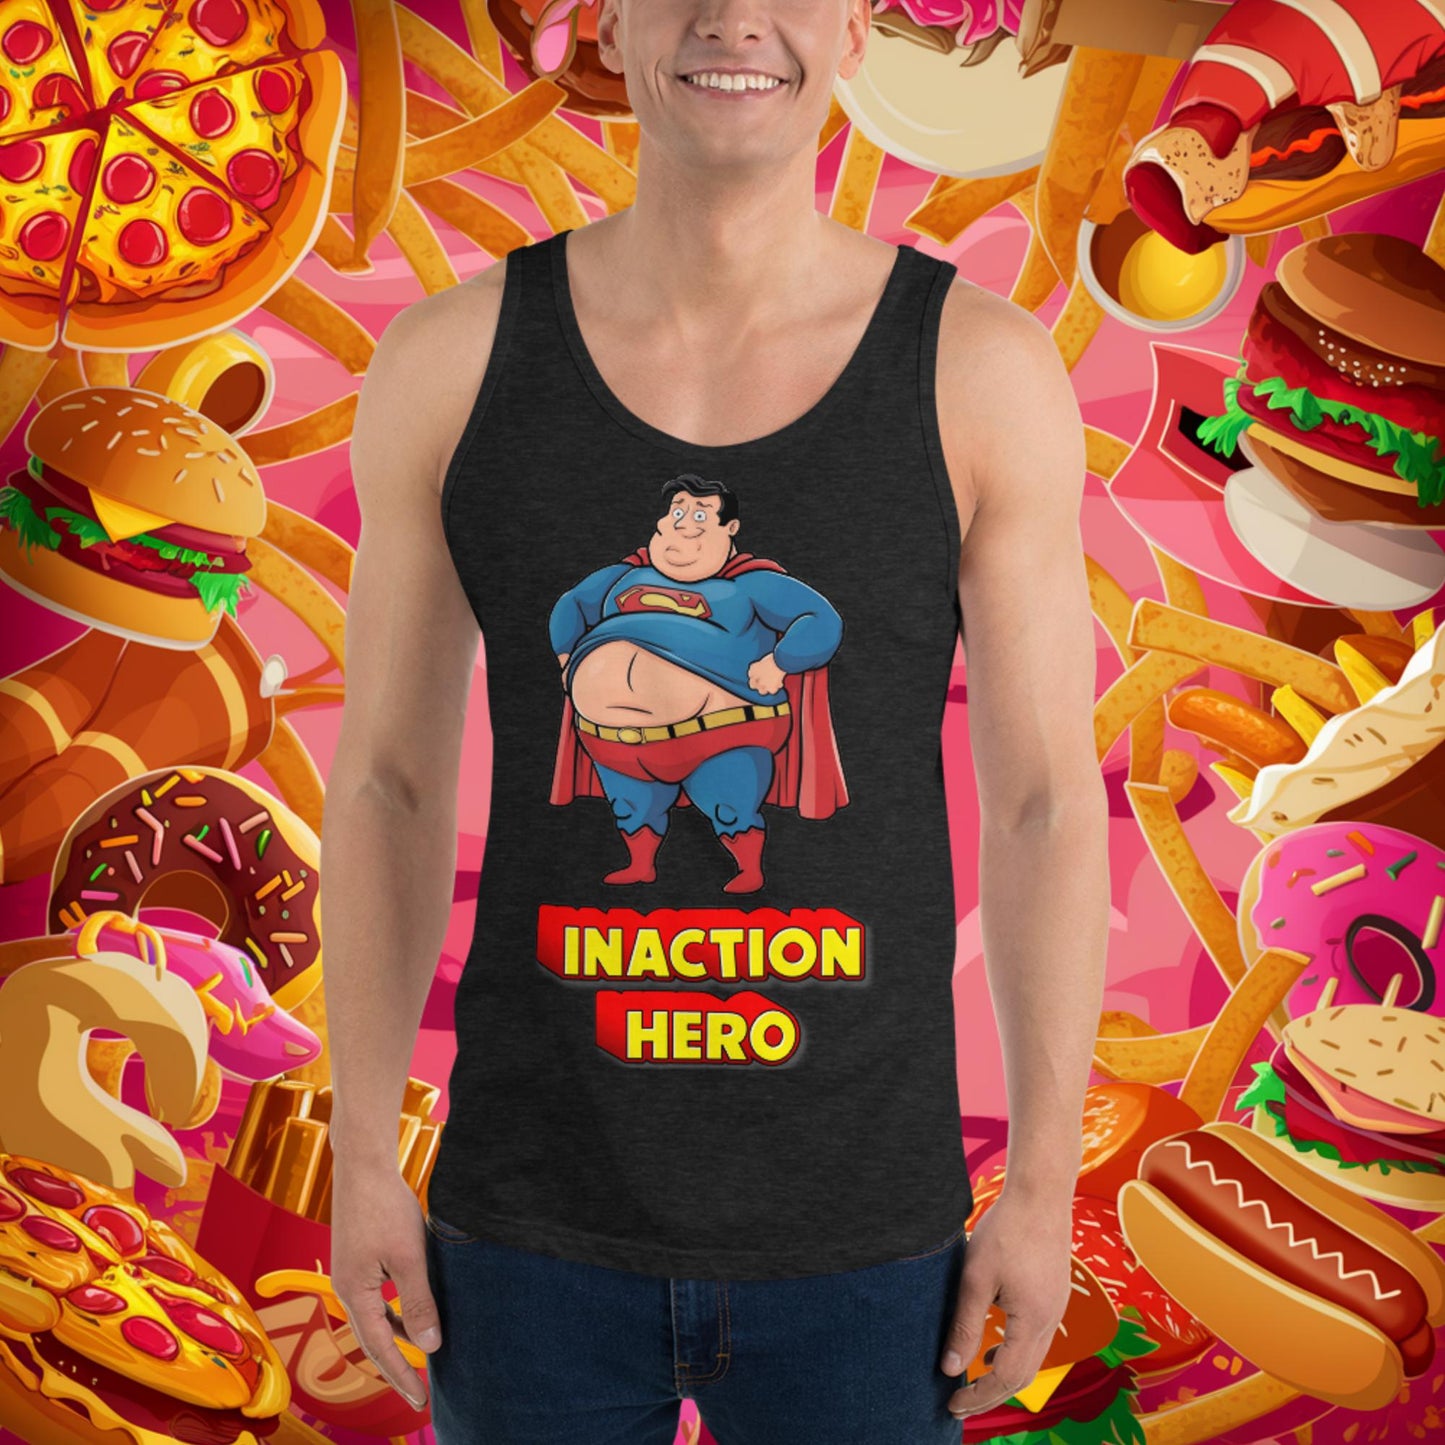 Inaction Hero Funny Fat Superhero Tank Top Next Cult Brand